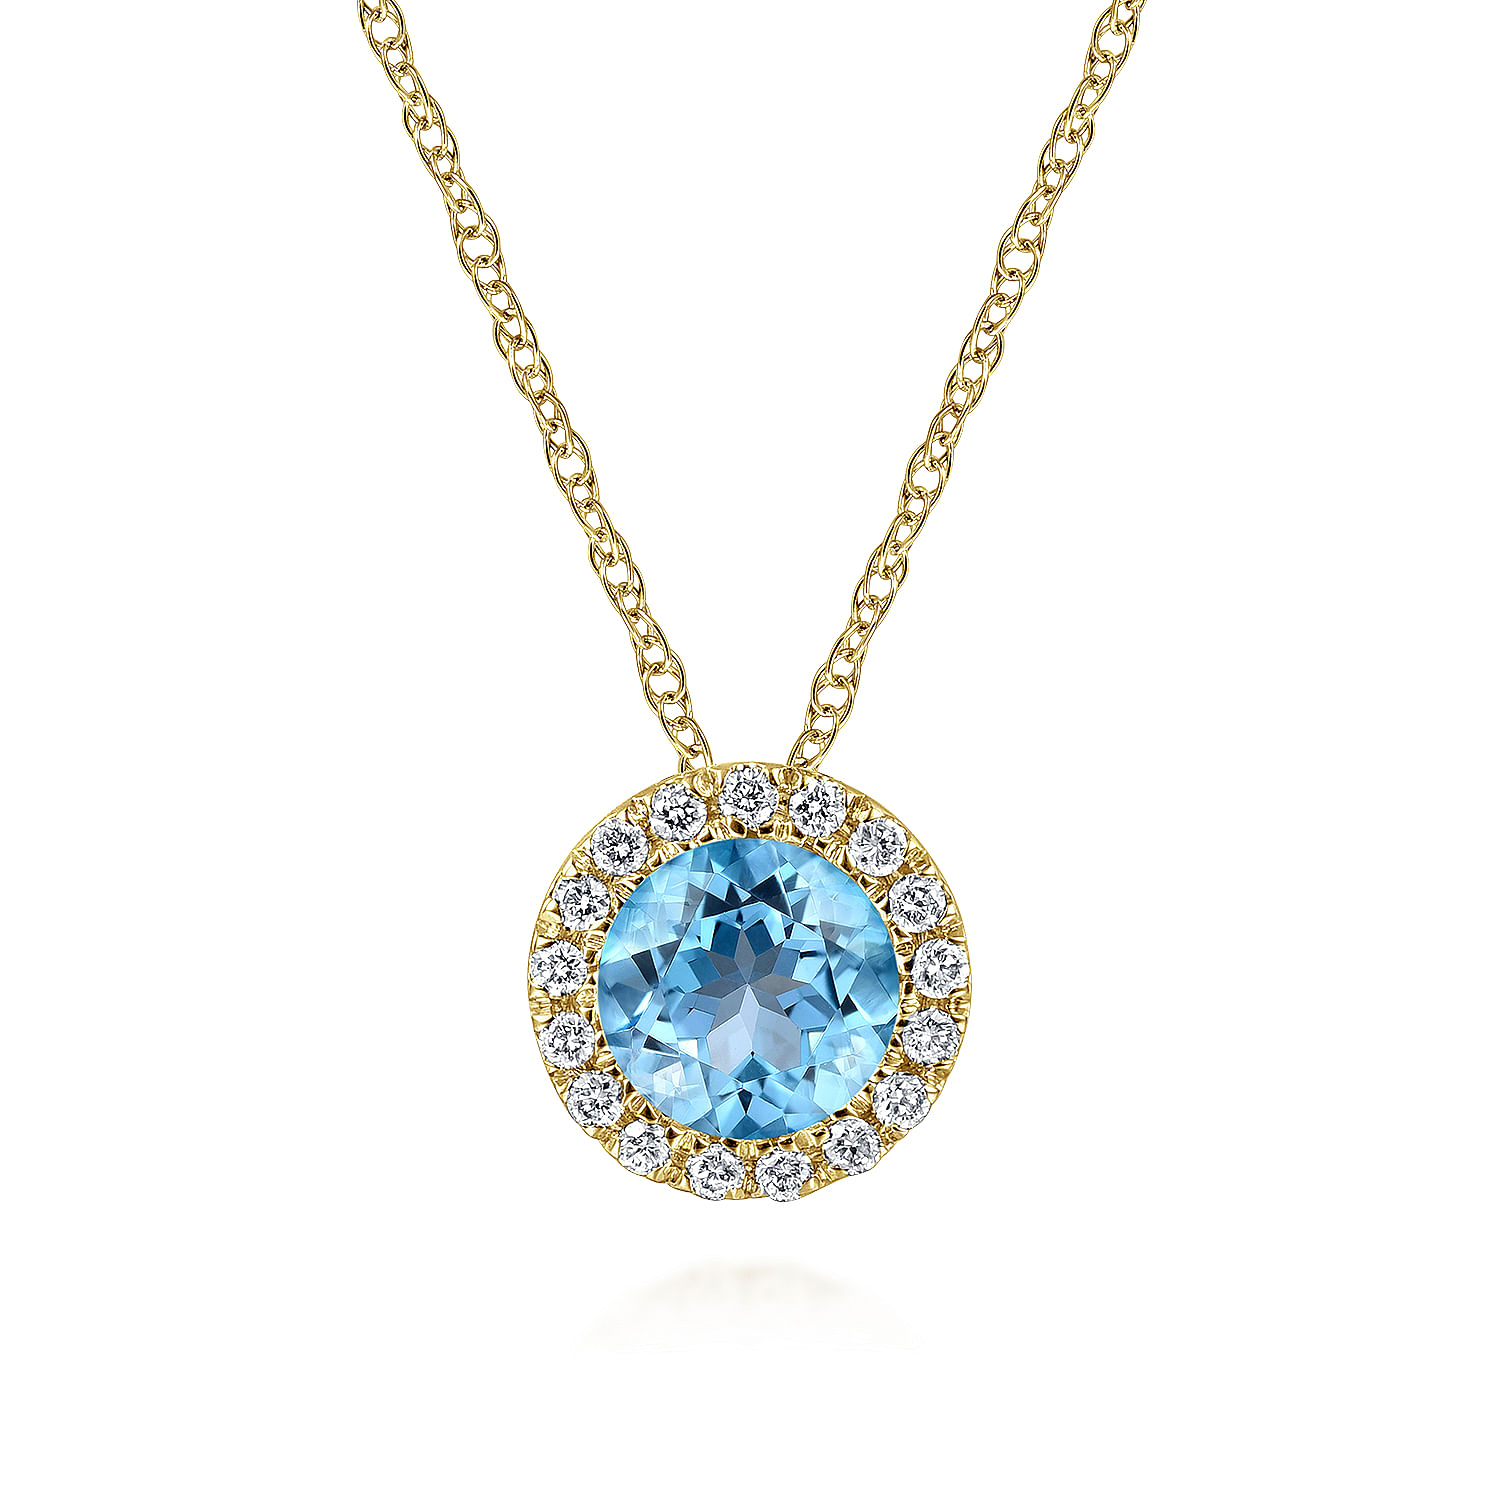 14K-Yellow-Gold-Round-Swiss-Blue-Topaz-and-Diamond-Halo-Pendant-Necklace1